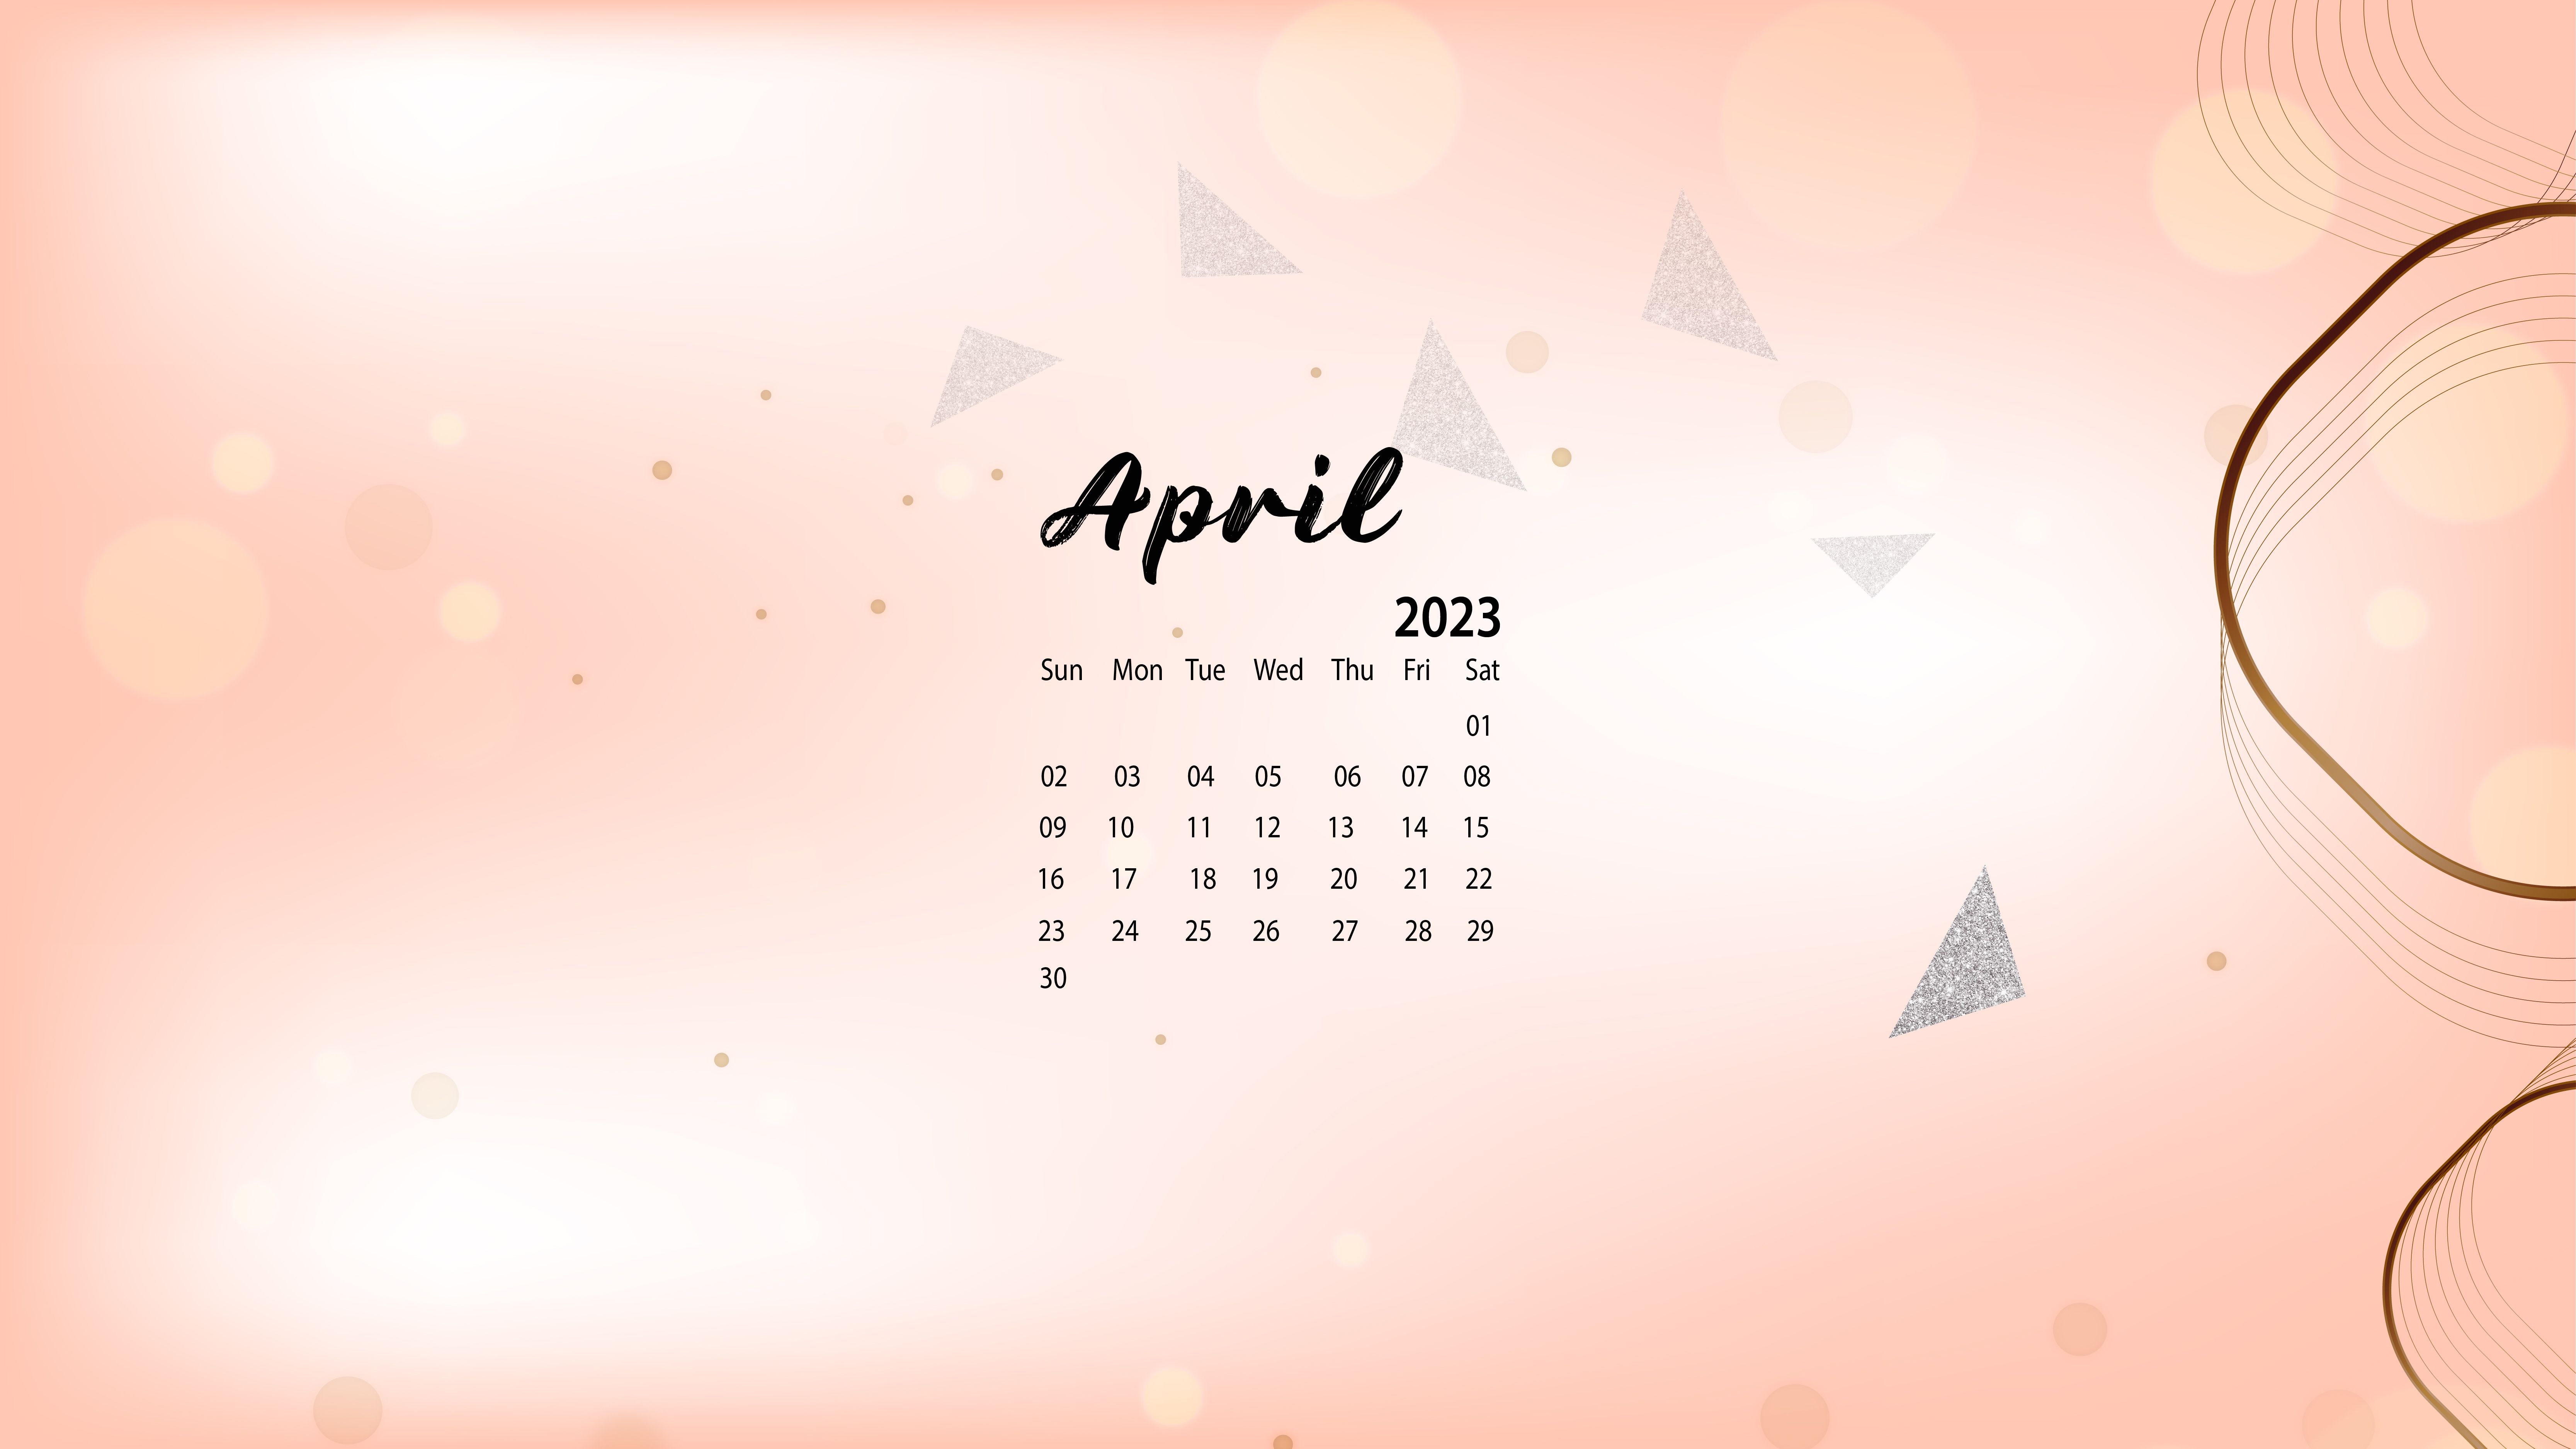  2023 Kalender Hintergrundbild 6667x3750. April 2023 Desktop Wallpaper Calendar